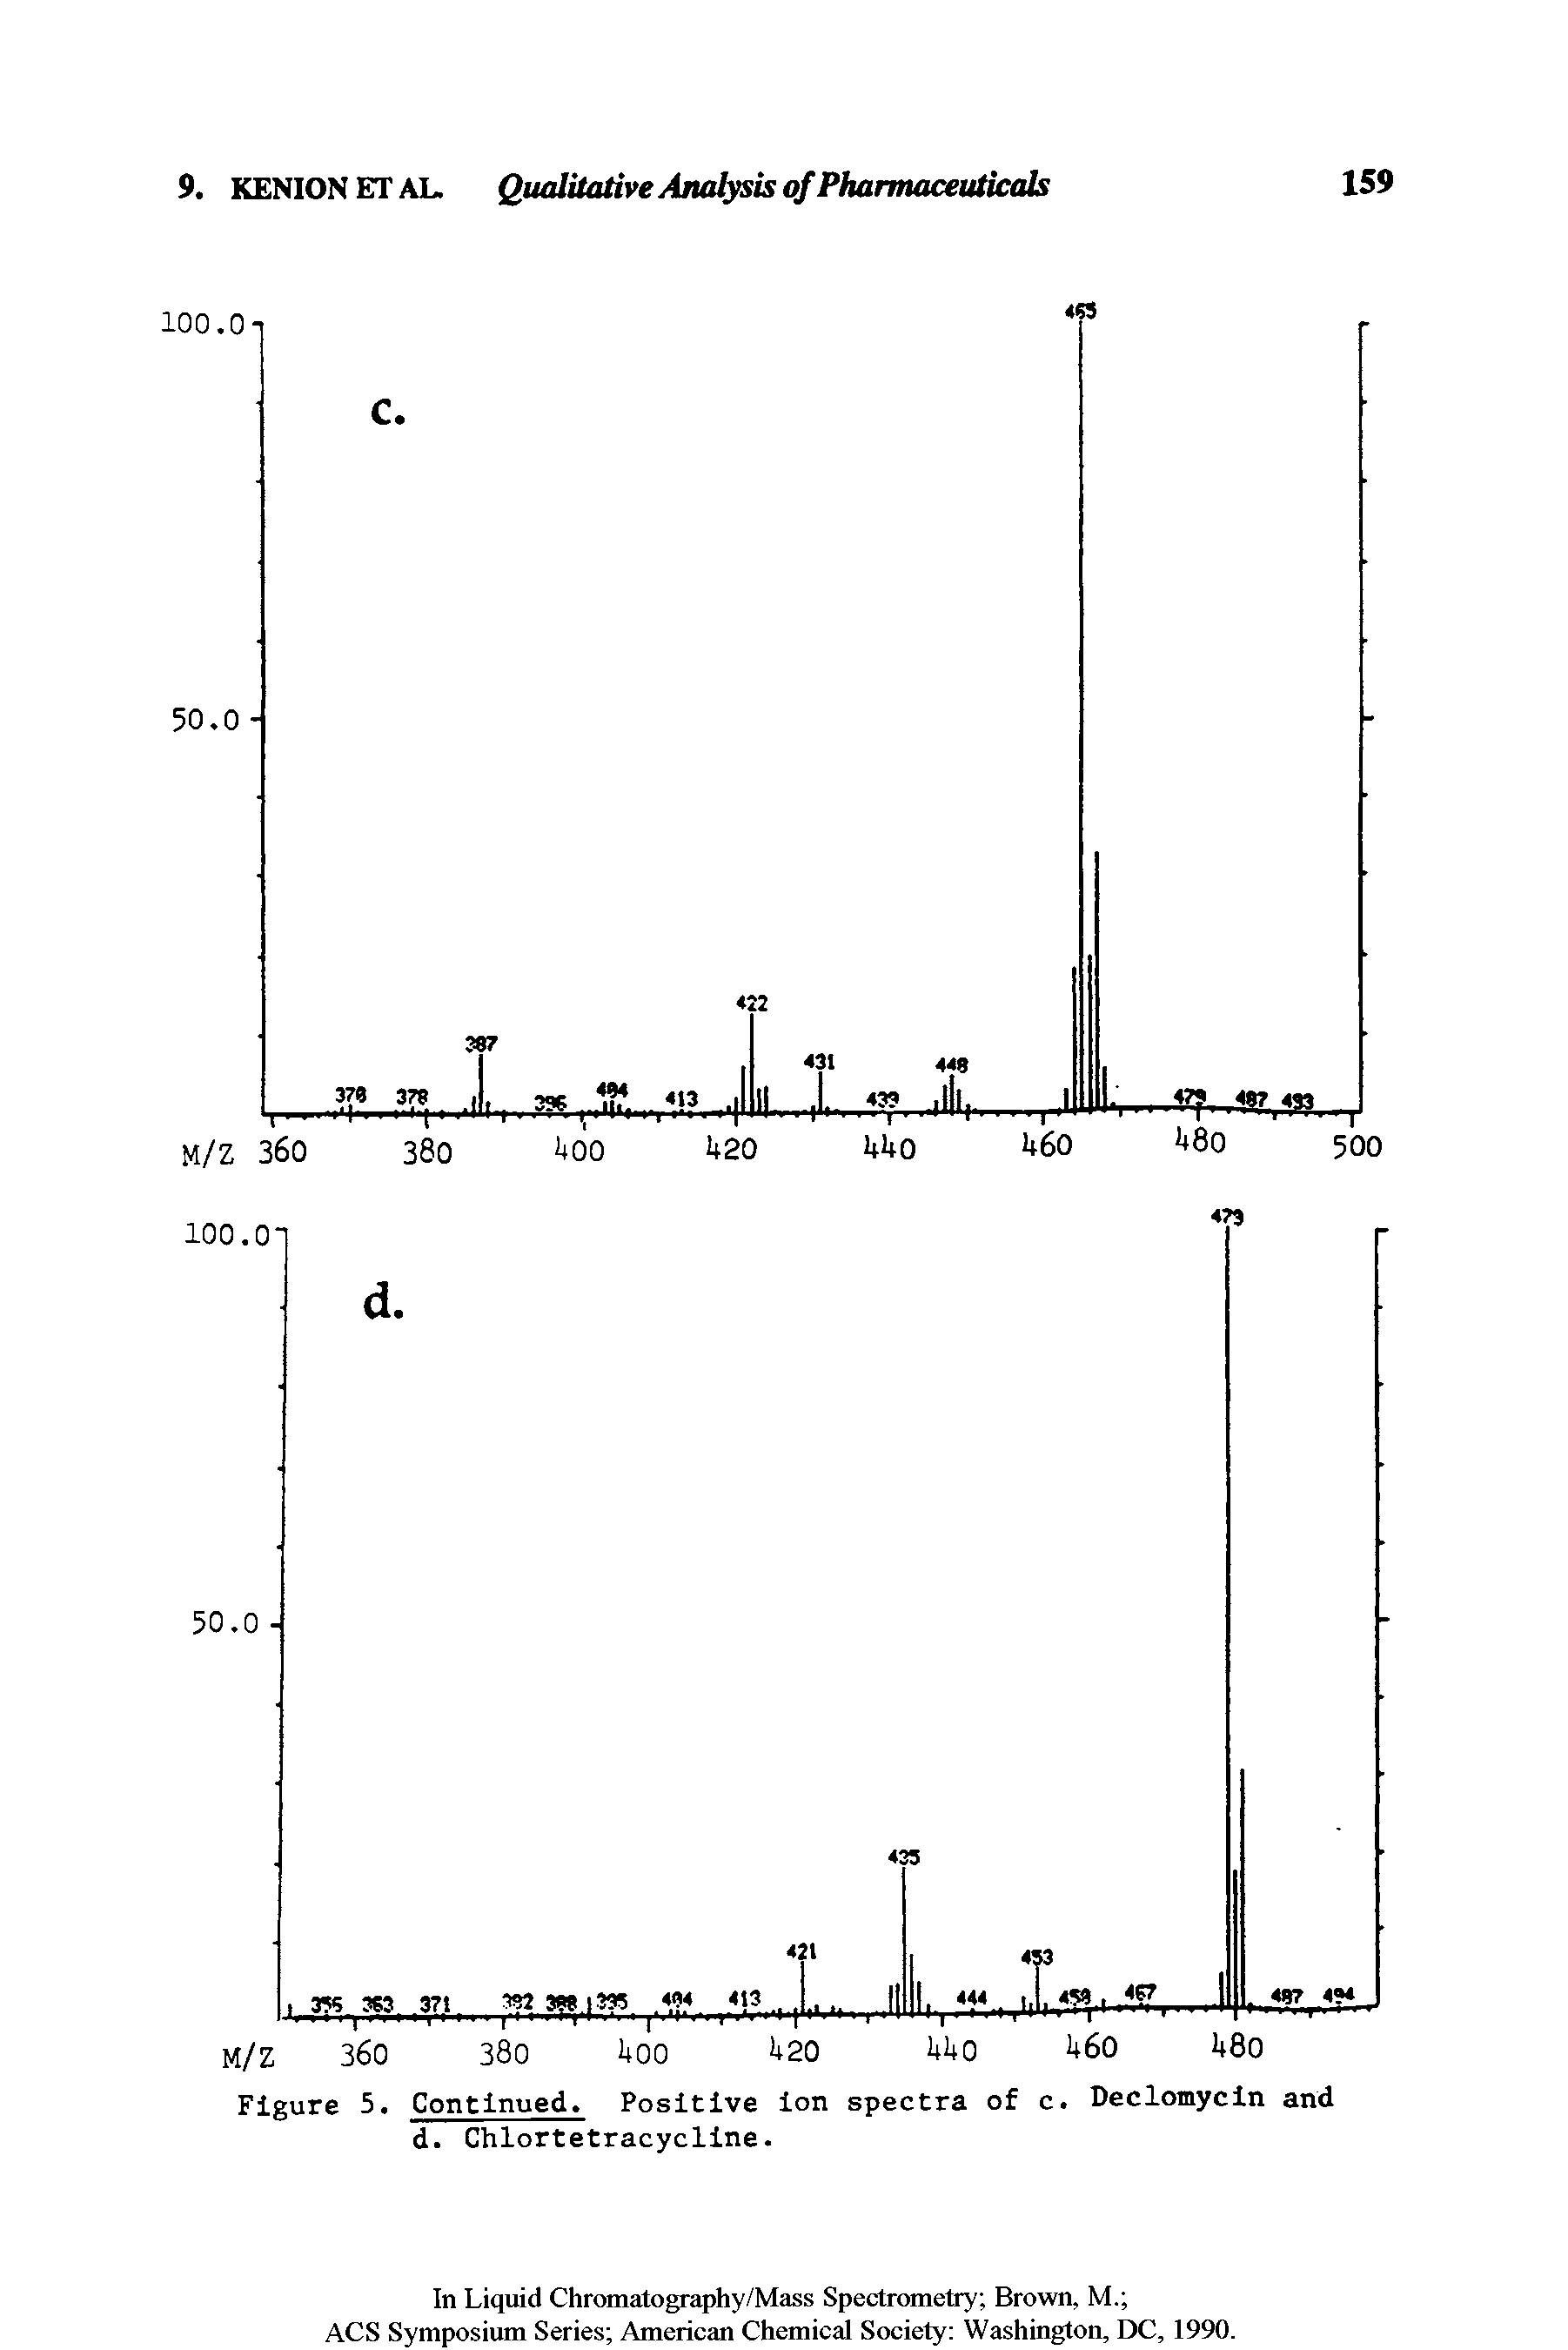 Figure 5. Continued. Positive ion spectra of c. Declomycin and d. Chlortetracycline.